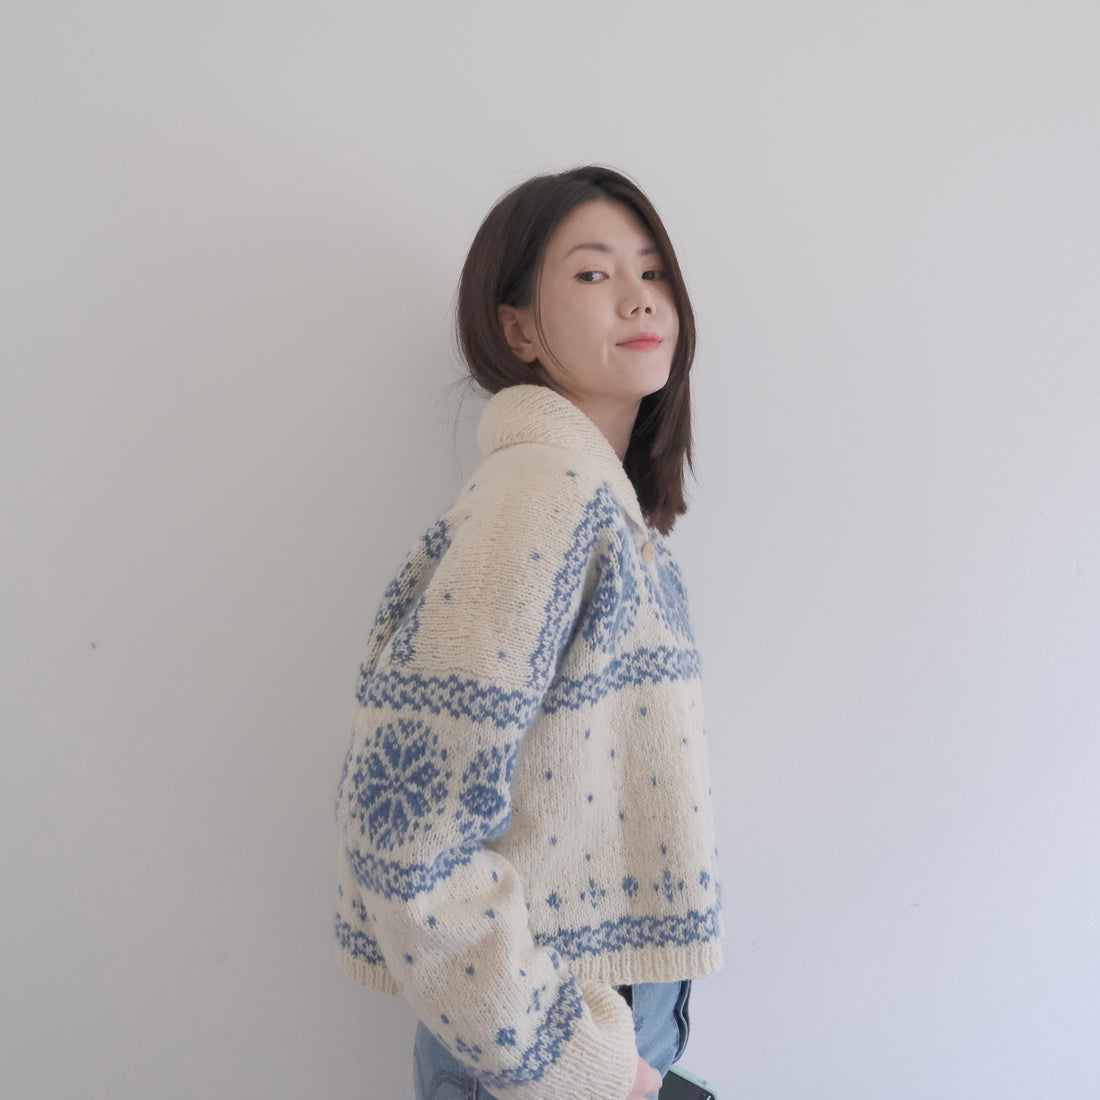 Soumine Kim - The Christstollen Cardigan kit de laine